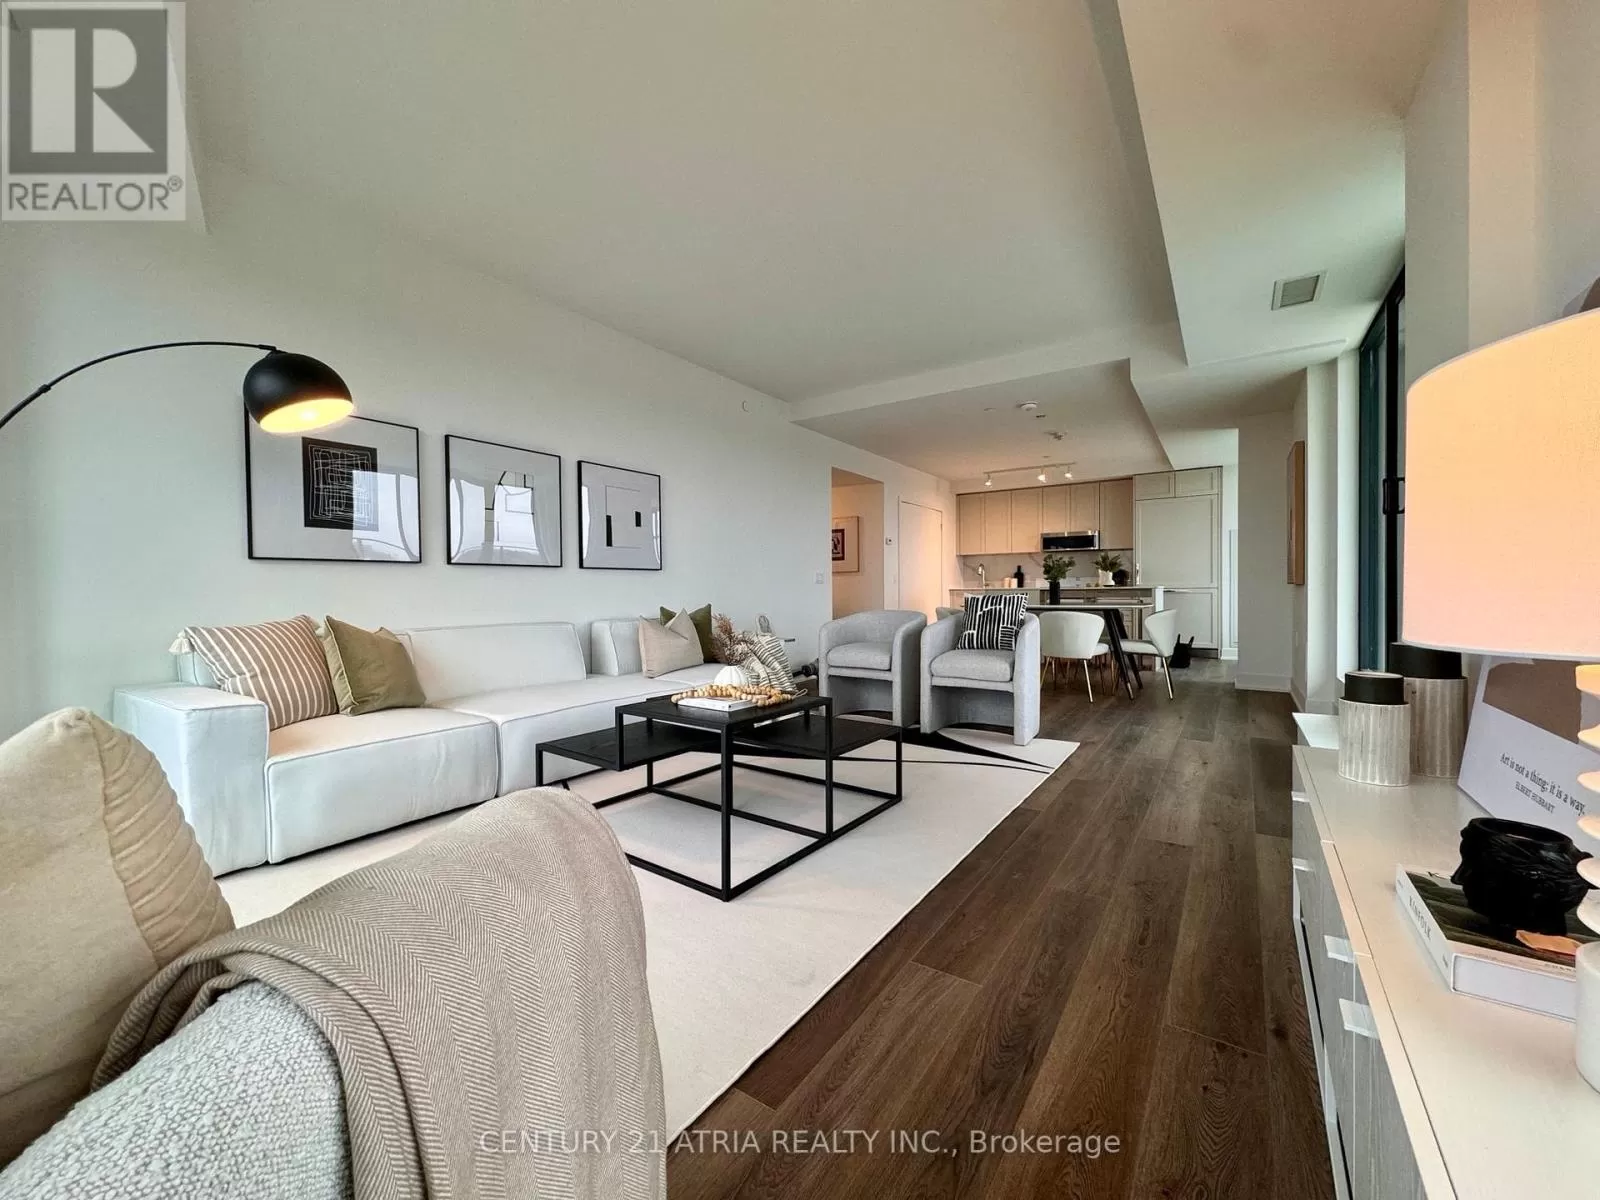 Apartment for rent: 811 - 250 Lawrence Avenue, Toronto, Ontario M5M 1B1